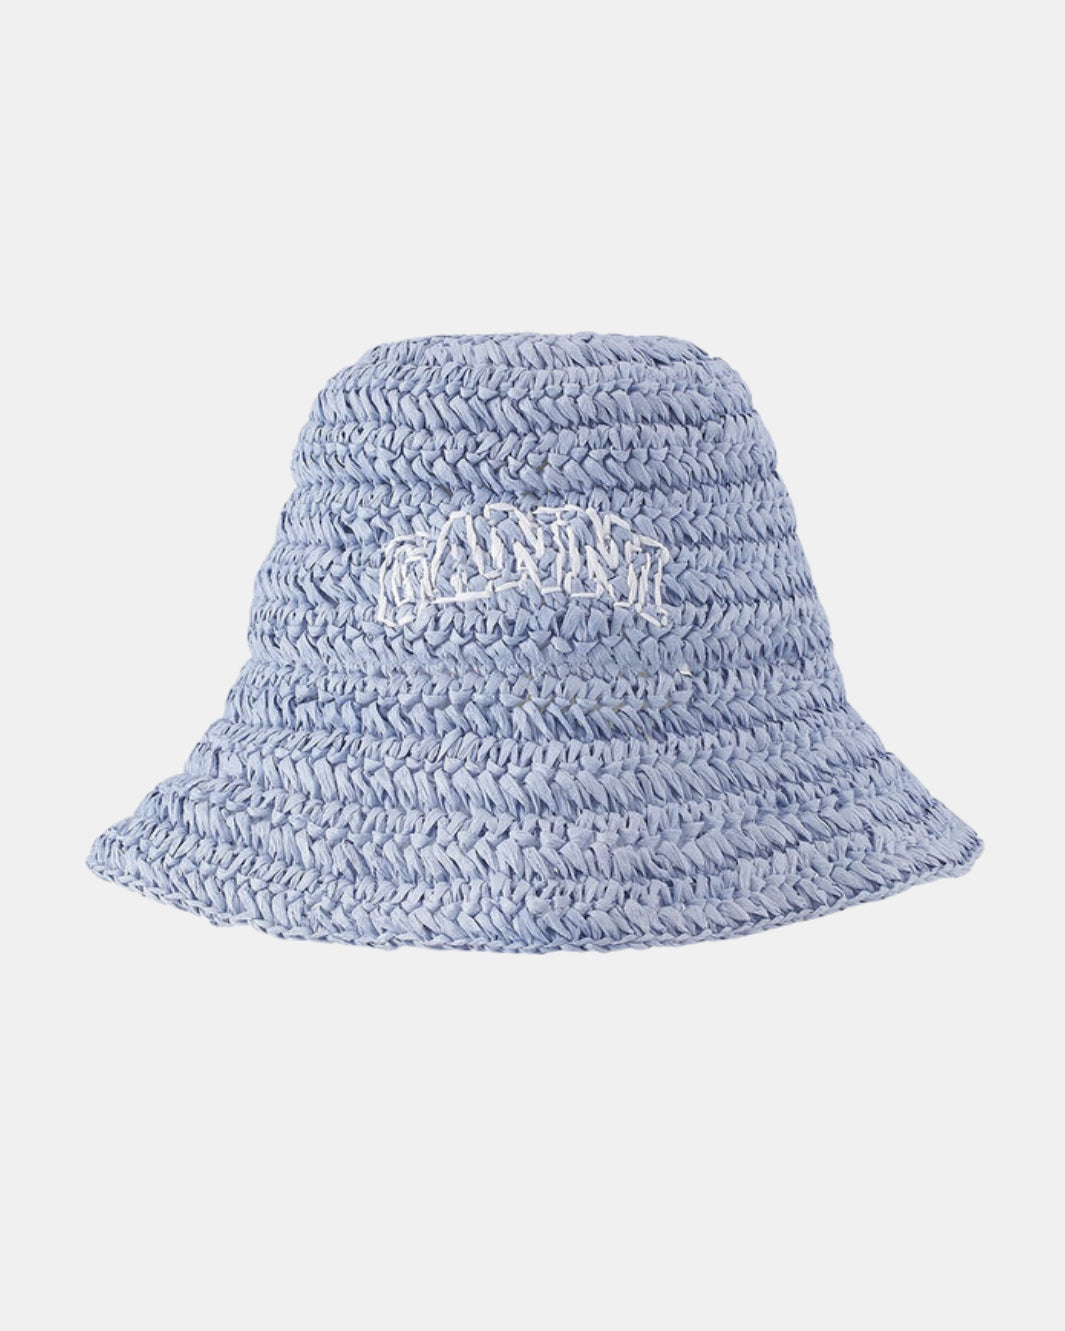 SUMMER STRAW HAT IN BABY BLUE - Romi Boutique